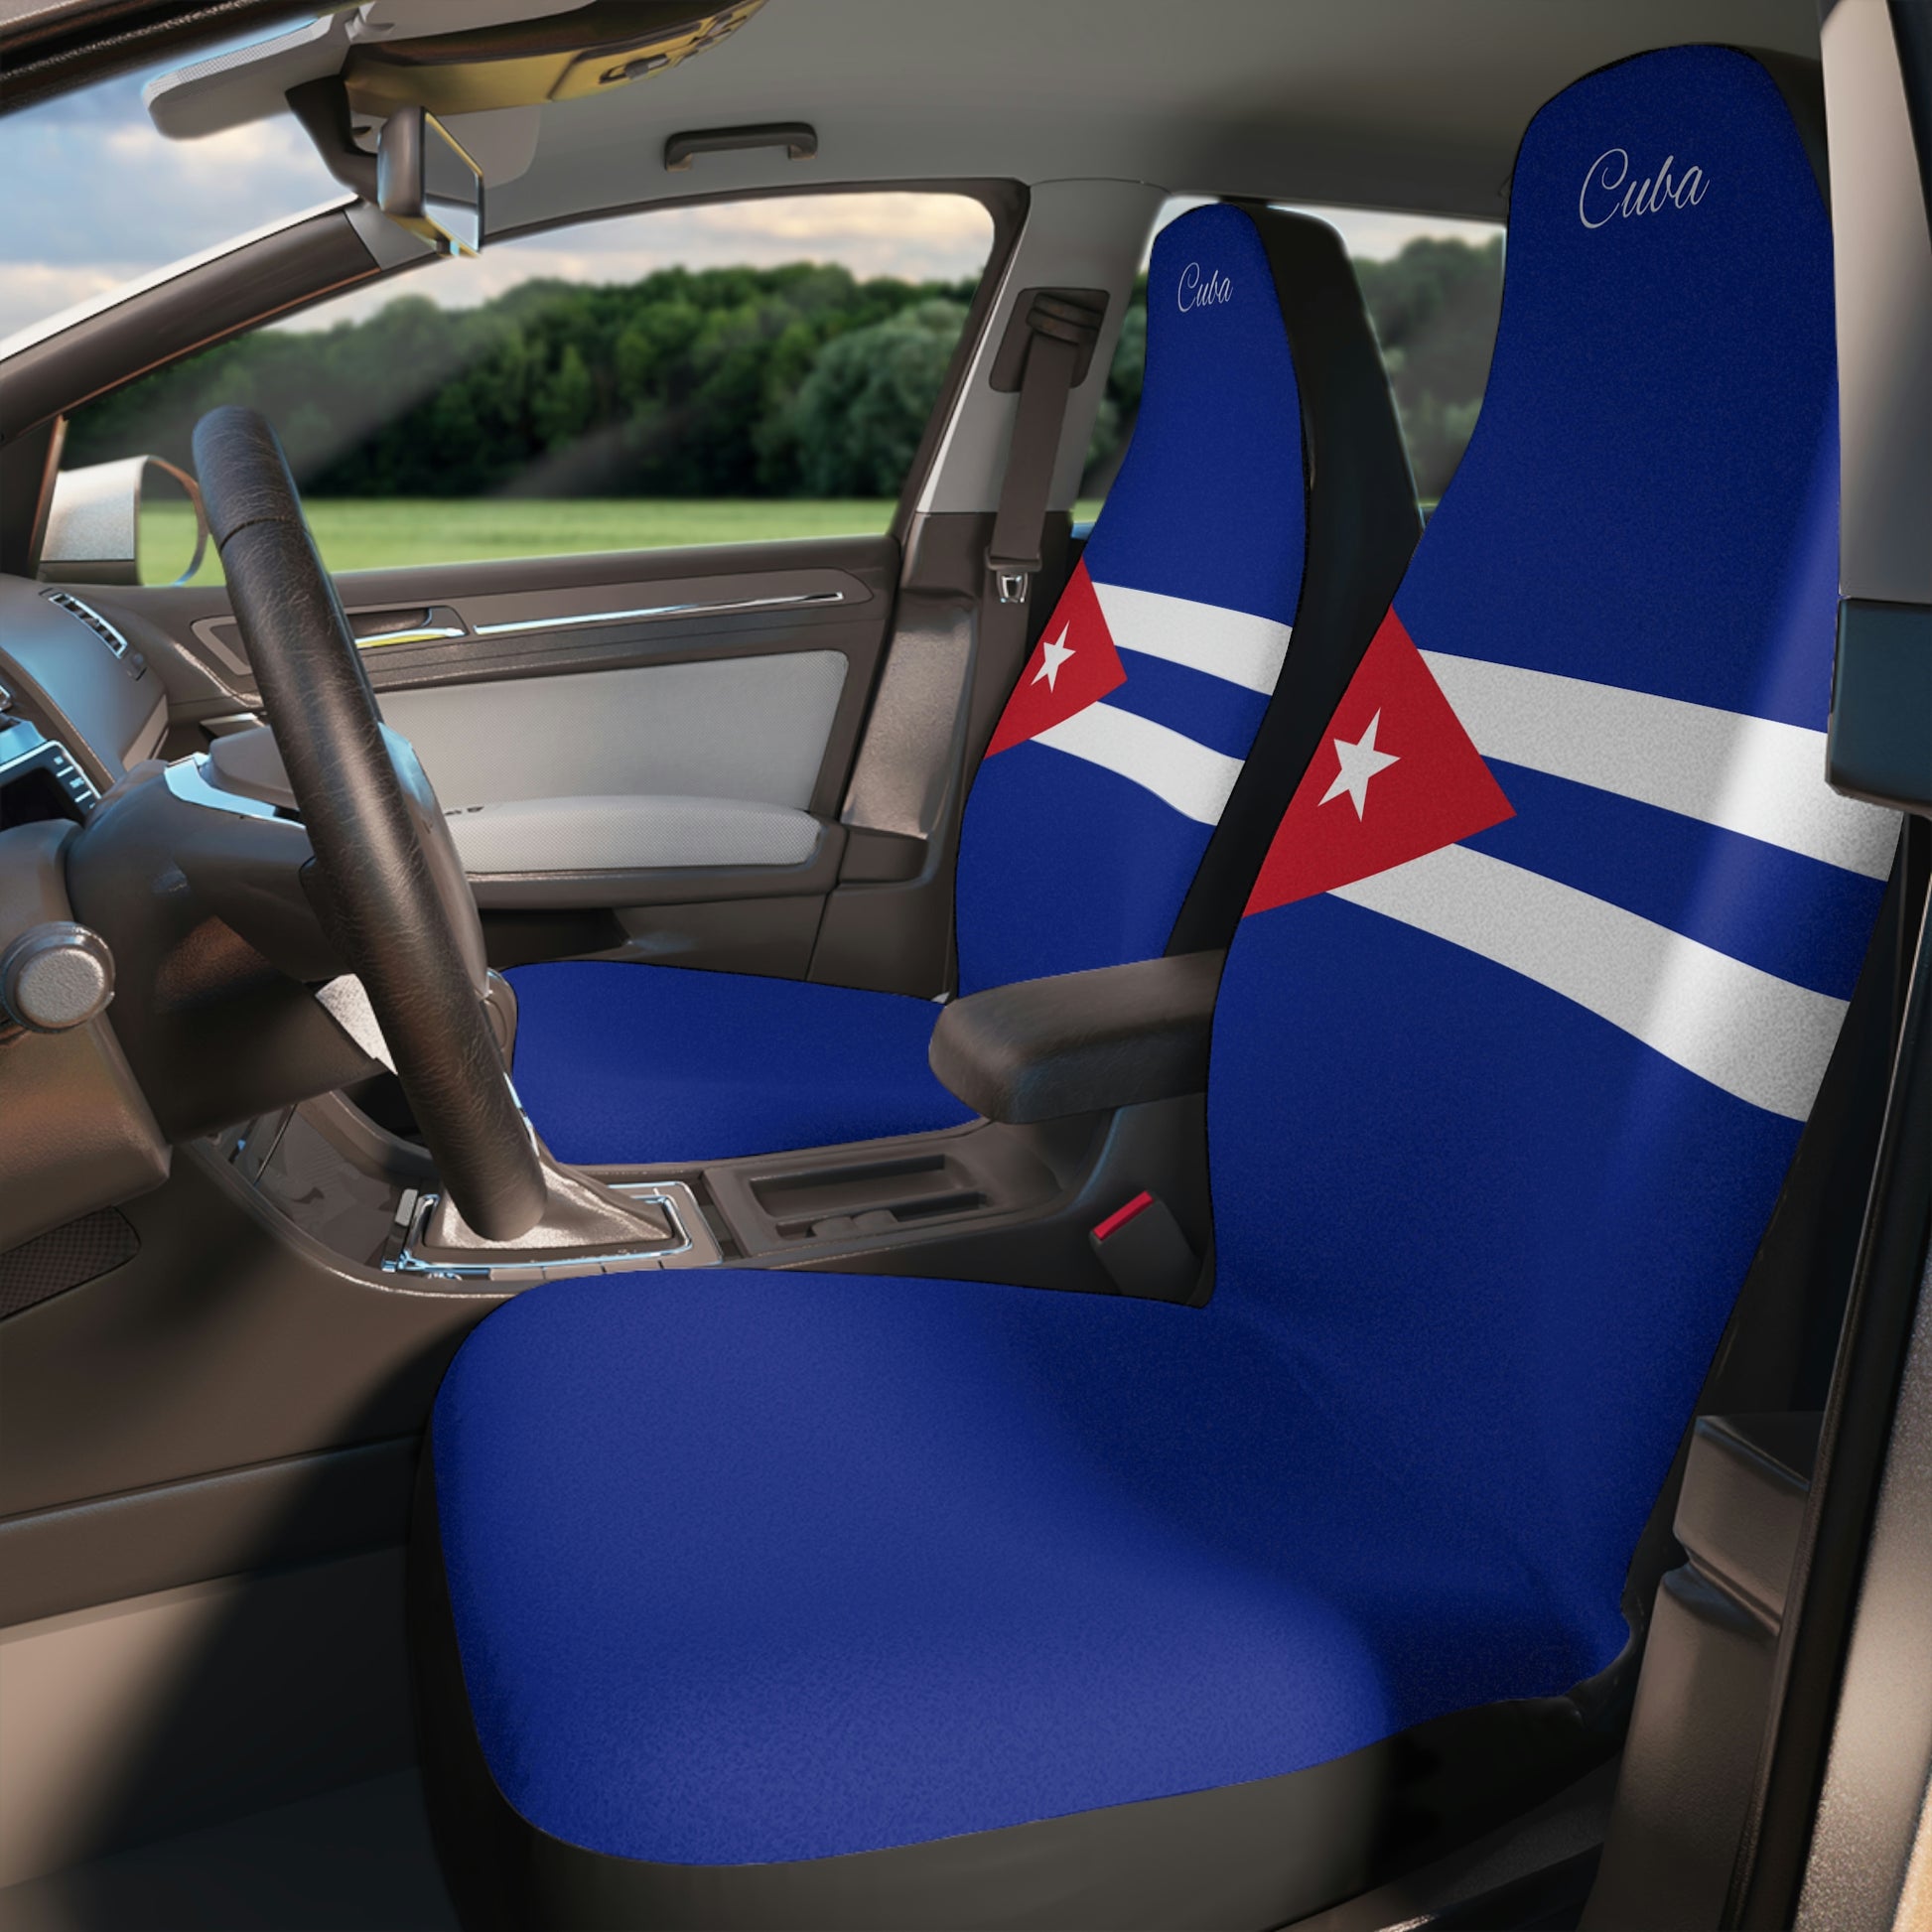 Cuba Flag Car Seat Covers Universal